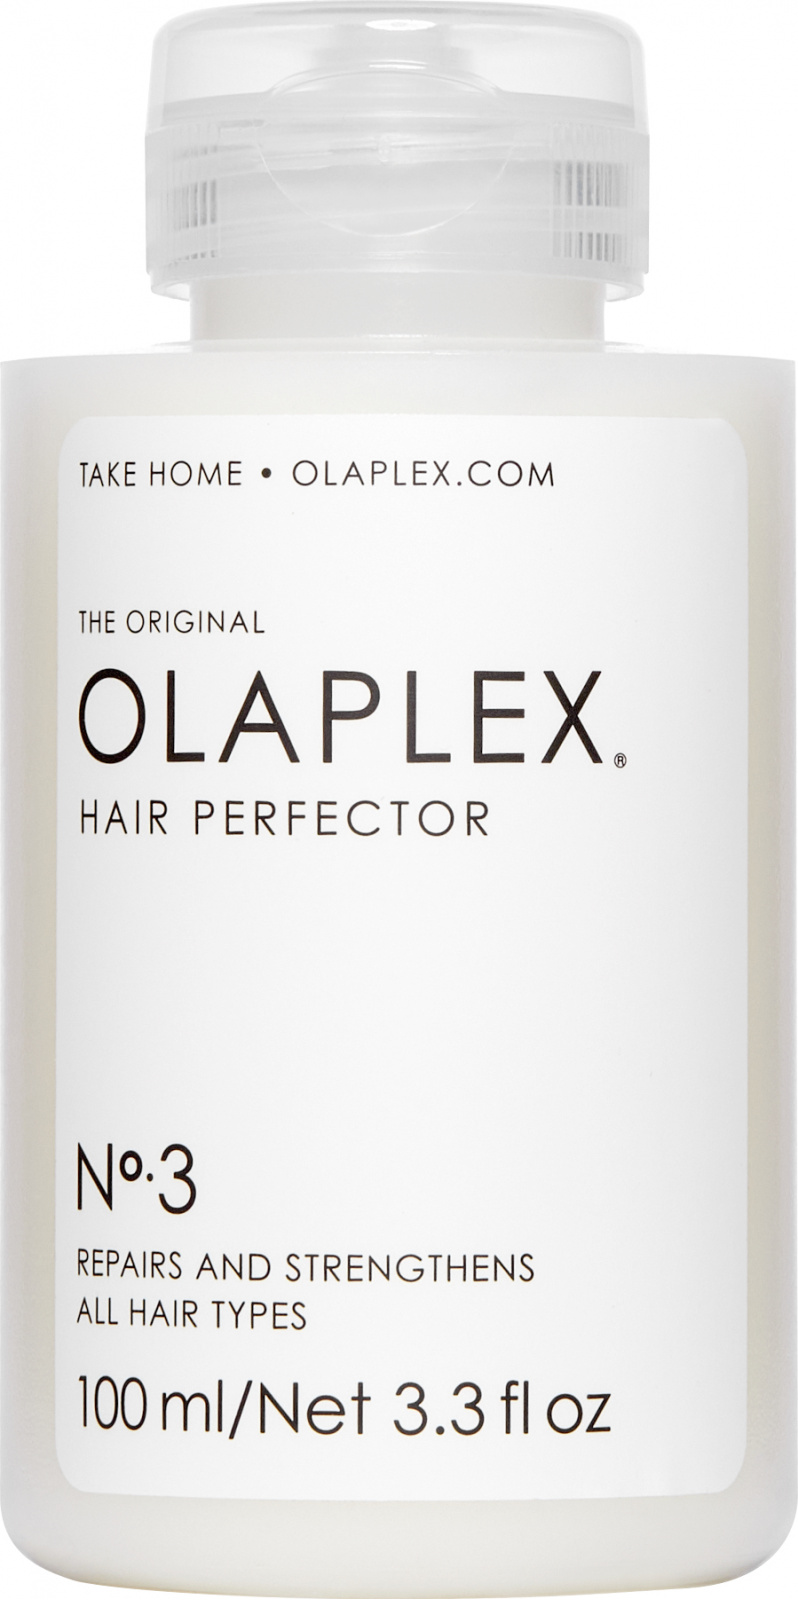 Nyttig skinke børn Olaplex Hair Perfector N° 3 kúra pro domácí péči od 446 Kč - Zbozi.cz